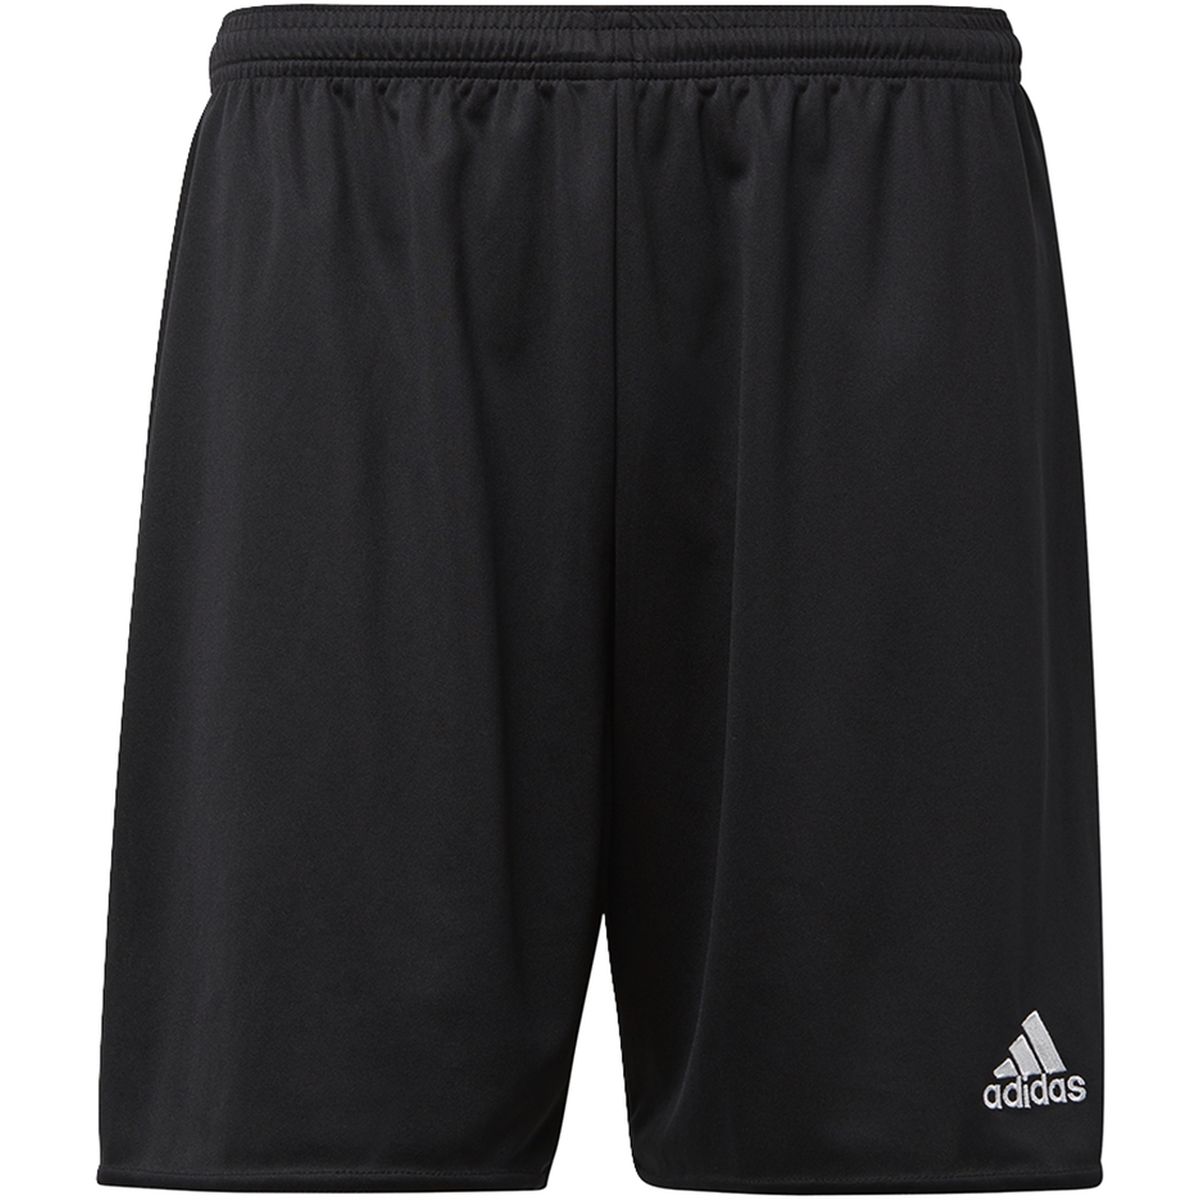 Adidas Parma 16 Shorts Herren